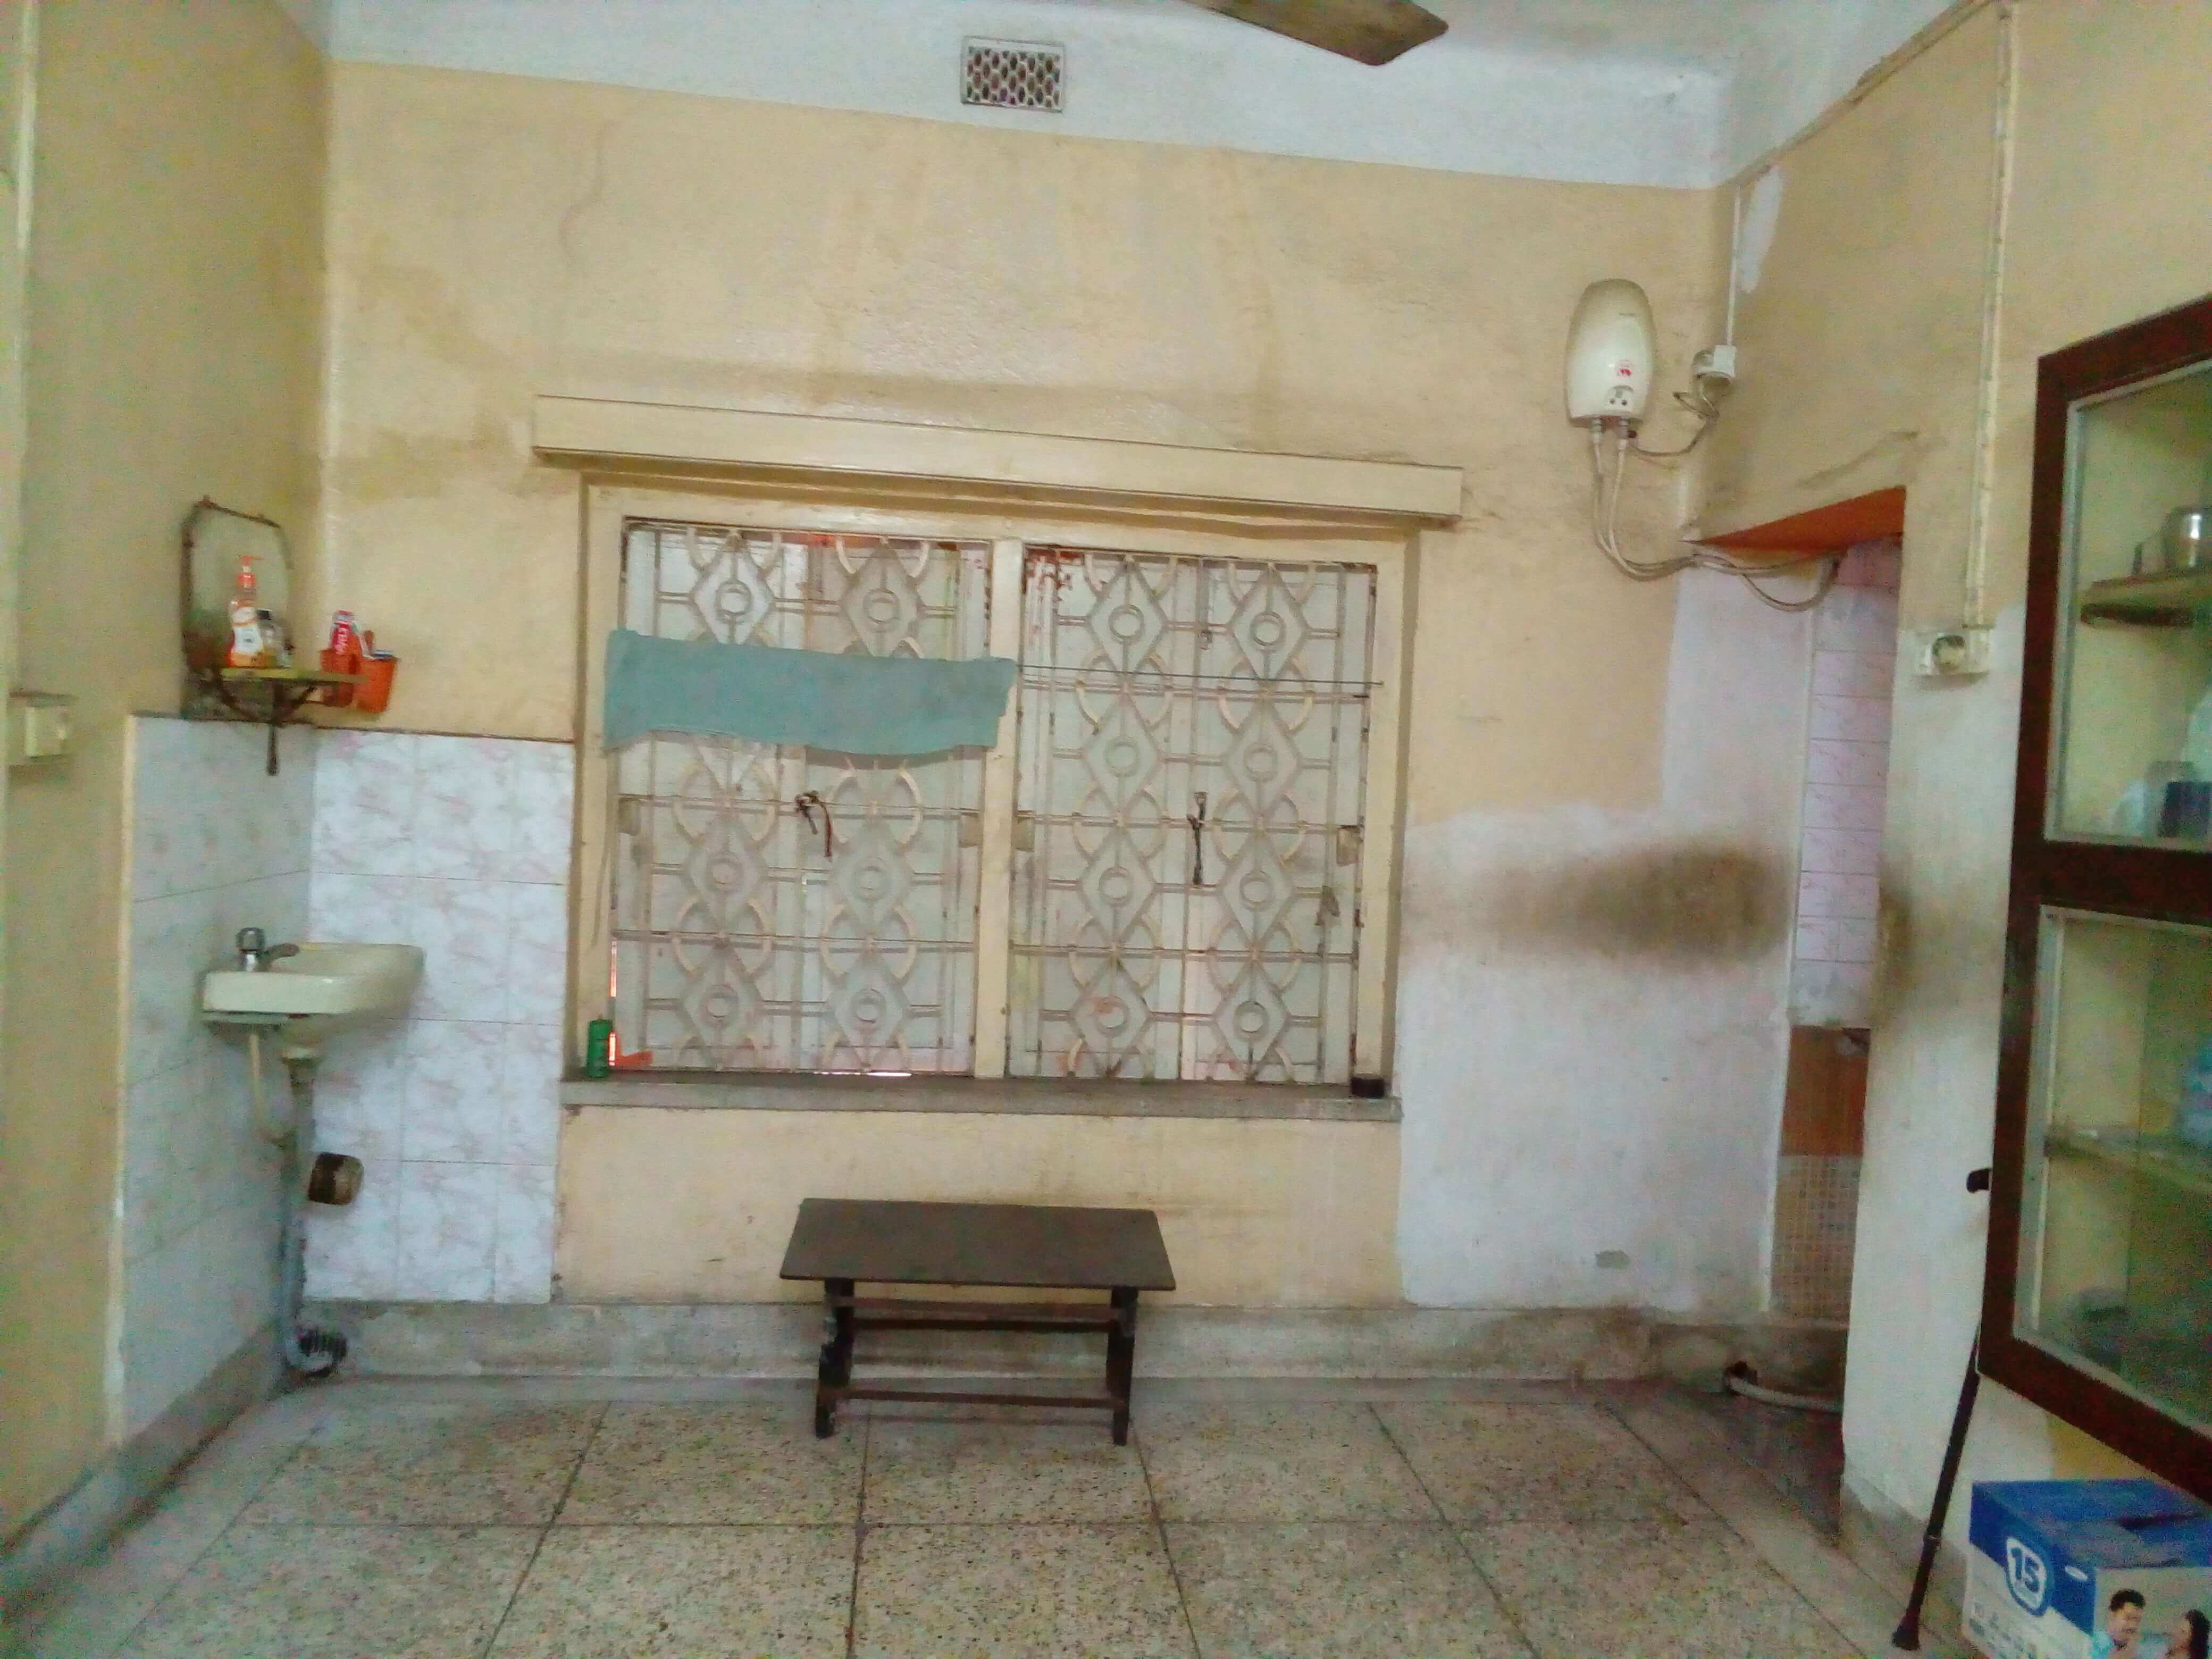 Office For Rent in Santoshpur Kolkata (Id: 19840)